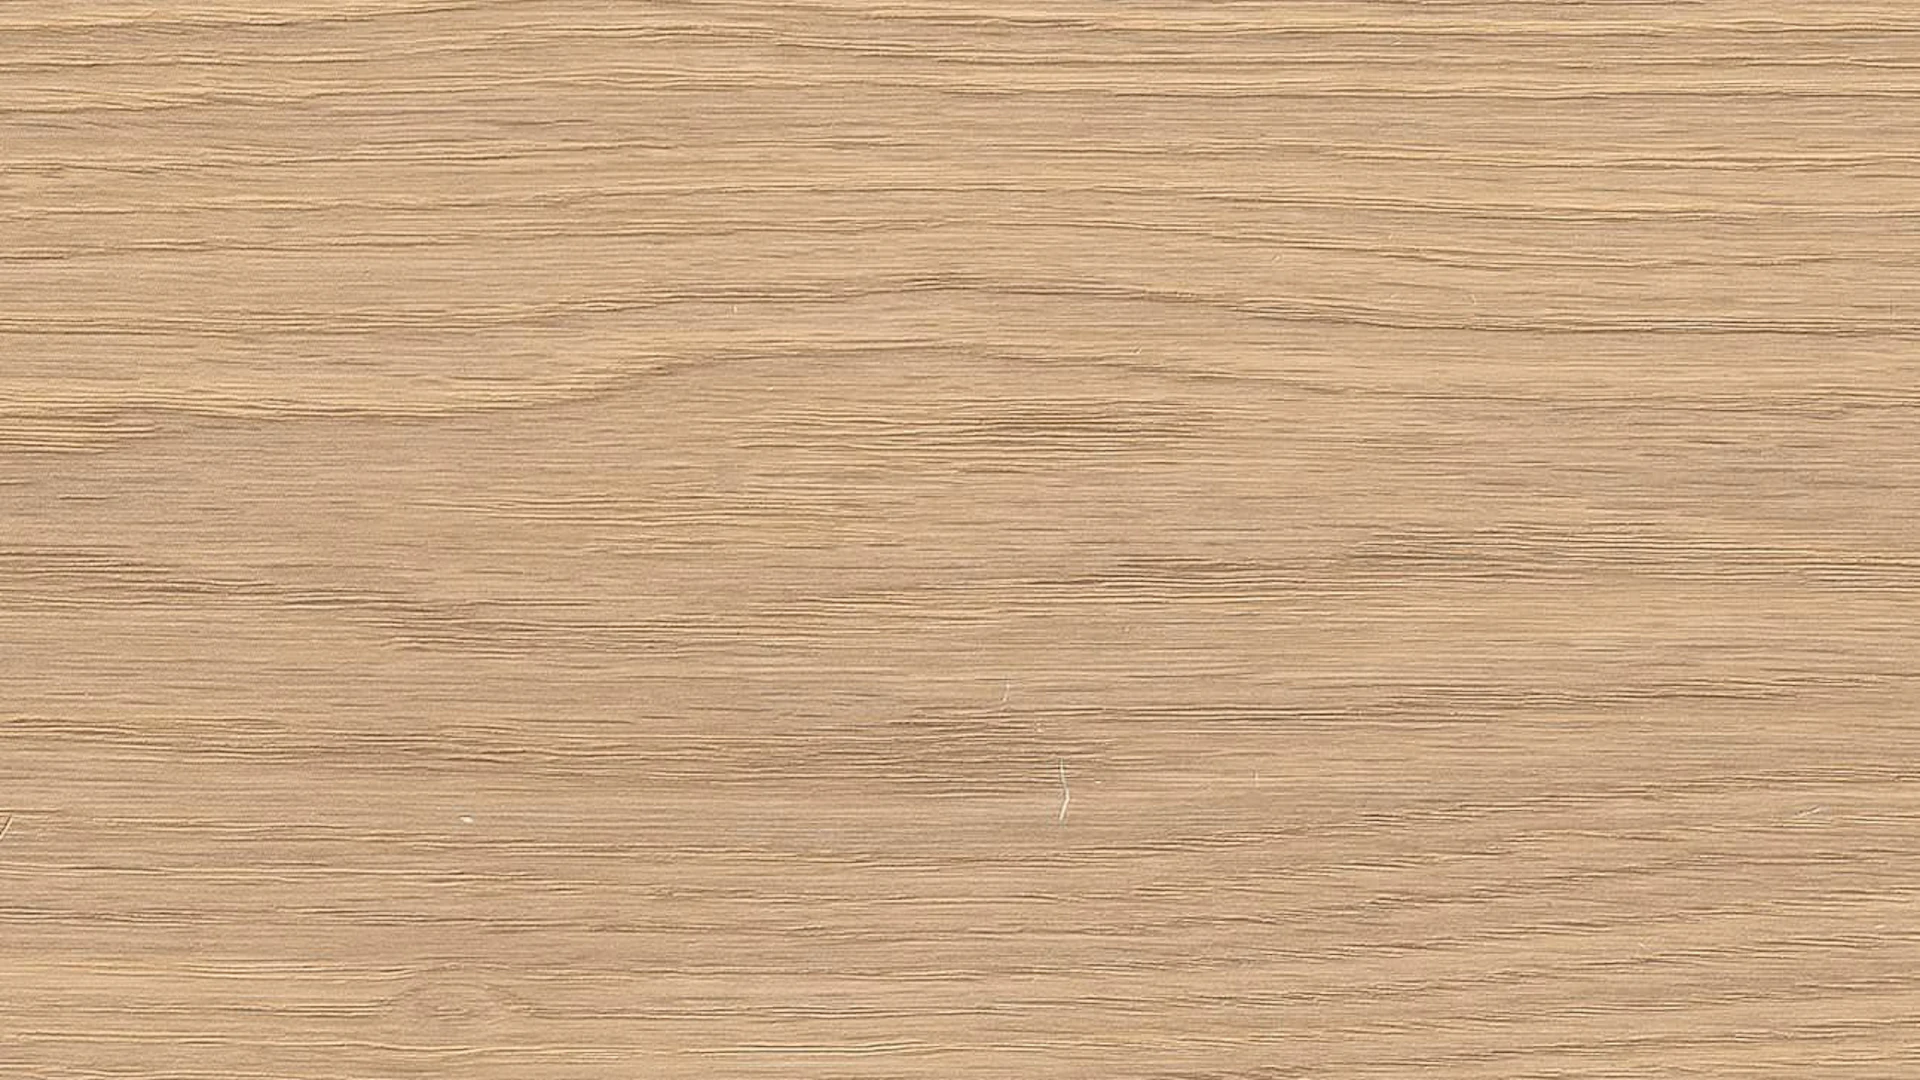 Haro Parquet Flooring - Series 4000 Puro naturaLin plus White Oak Markant (527326)